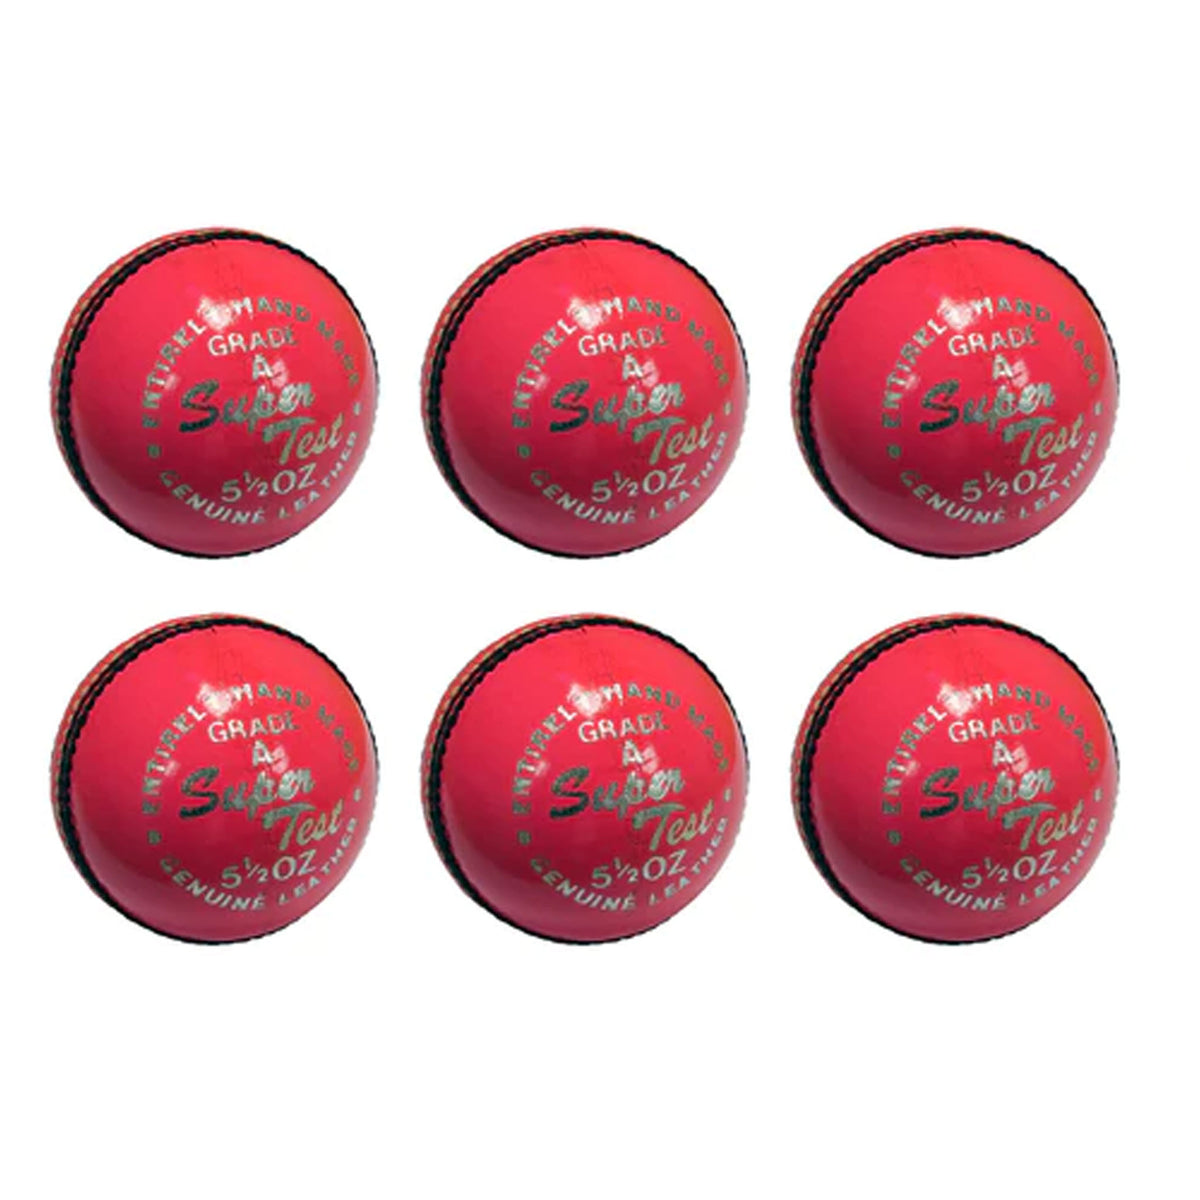 Salamander Super Test T20 Cricket Ball Box of 6: Pink